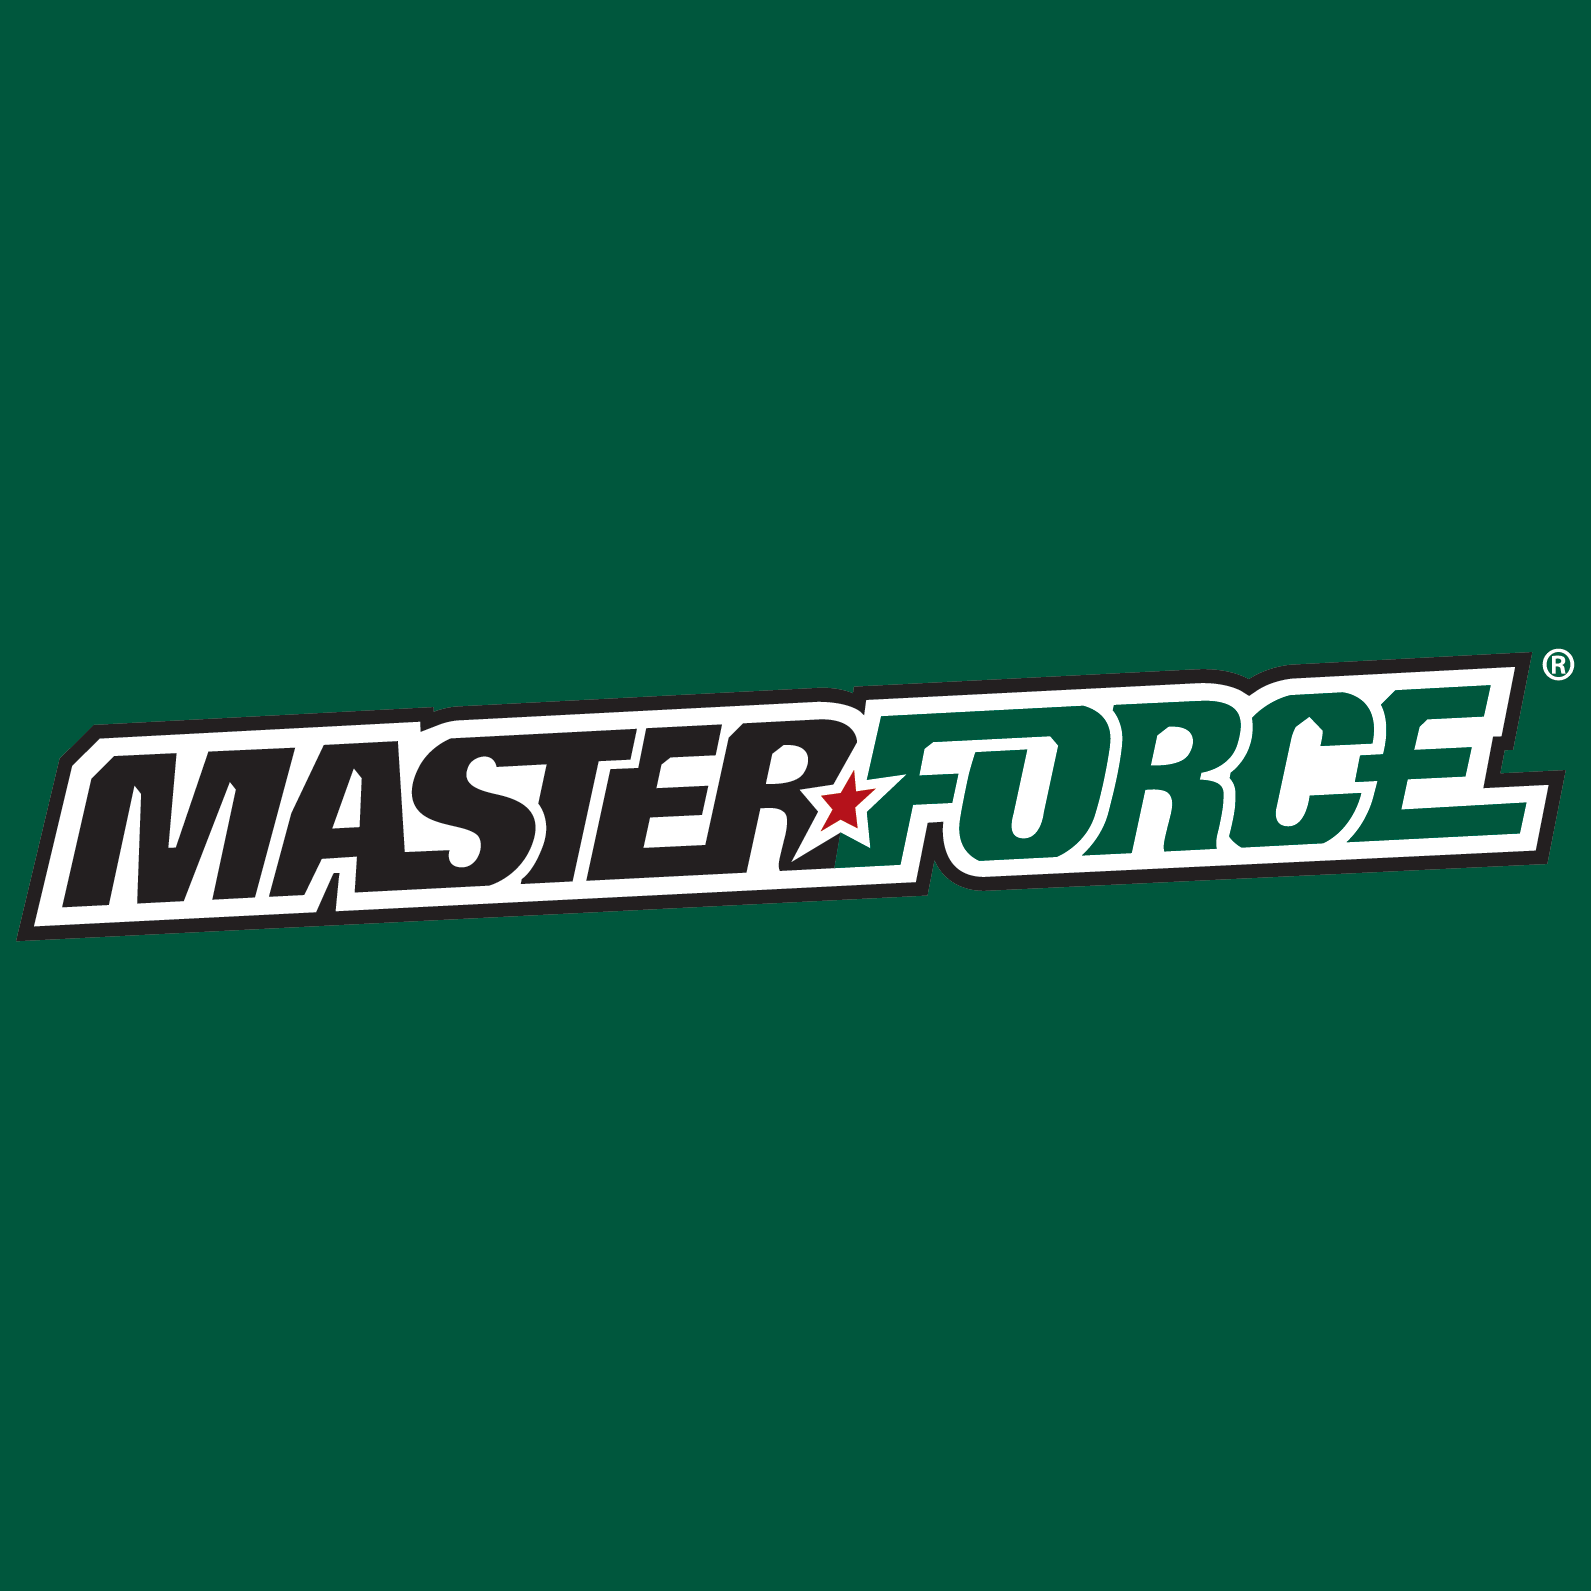 MasterForce